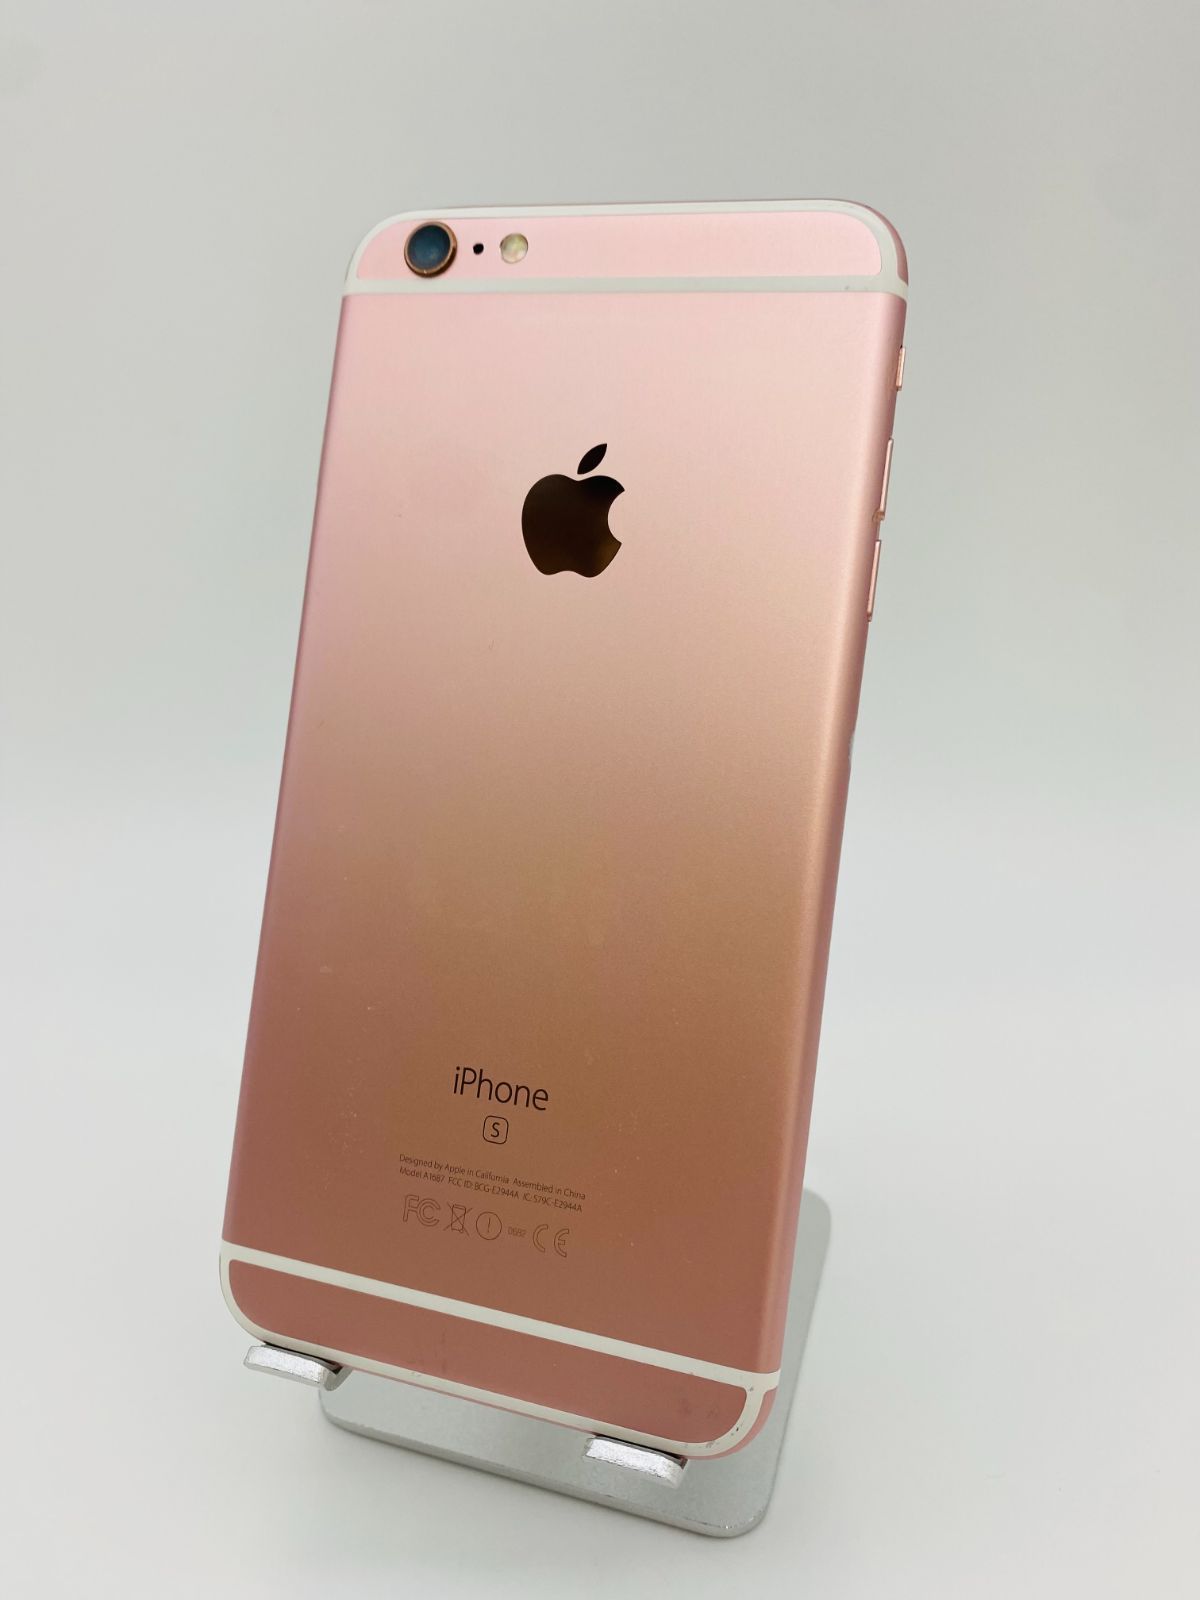 iPhone6s Plus 64GB ローズゴールド/シムフリー/大容量3400mAh新品